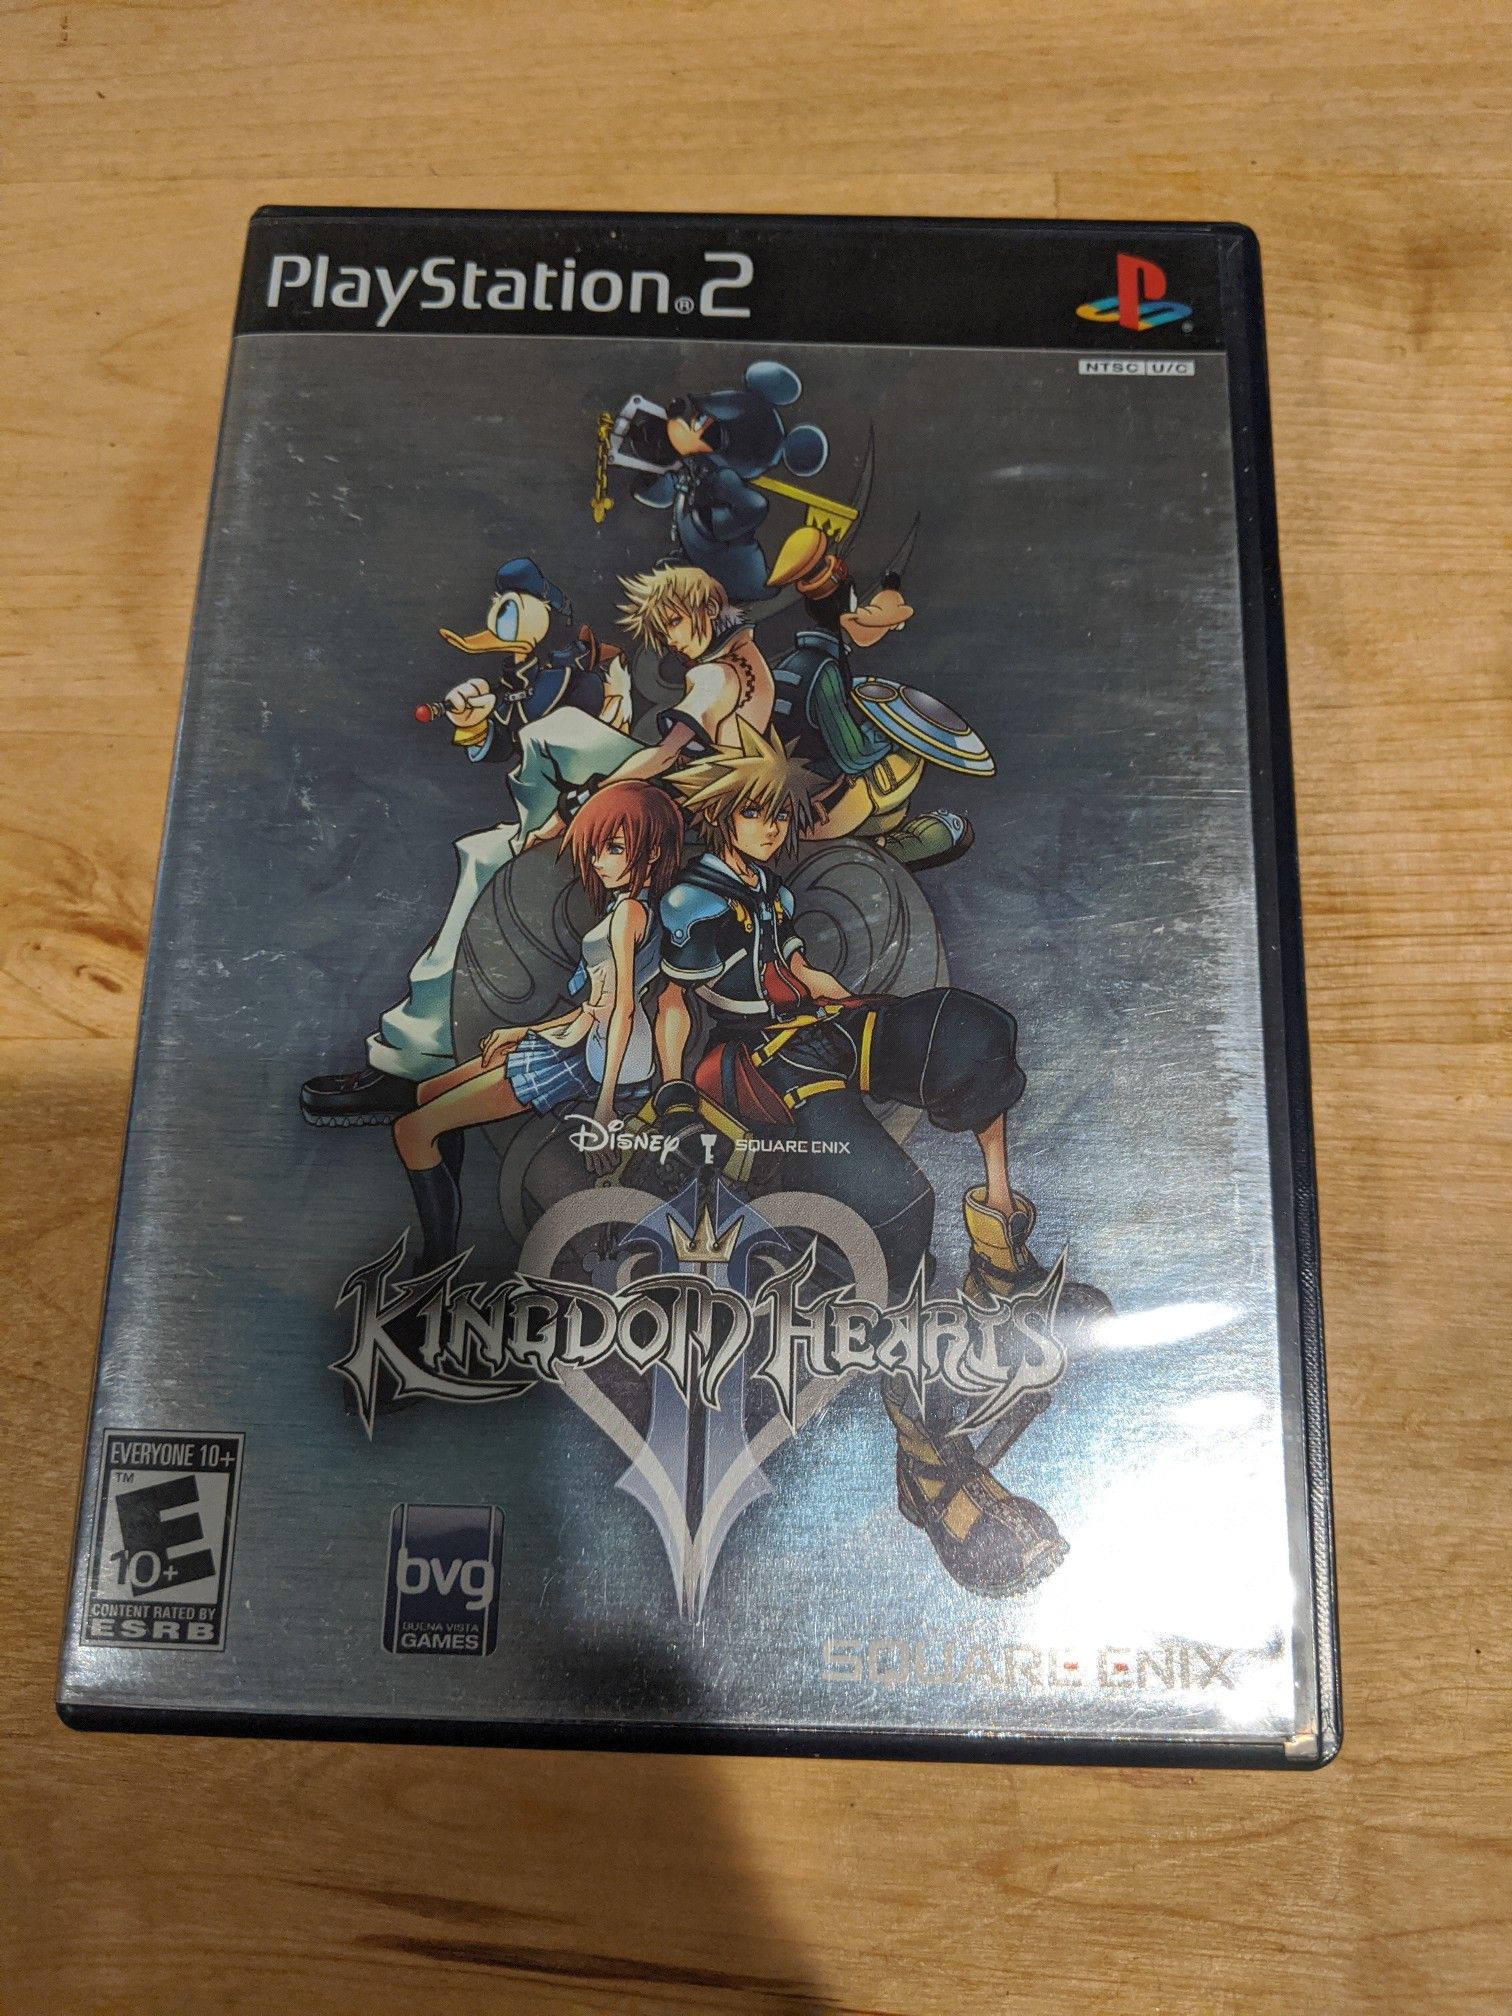 PlayStation 2 Game (Kingdom Hearts)